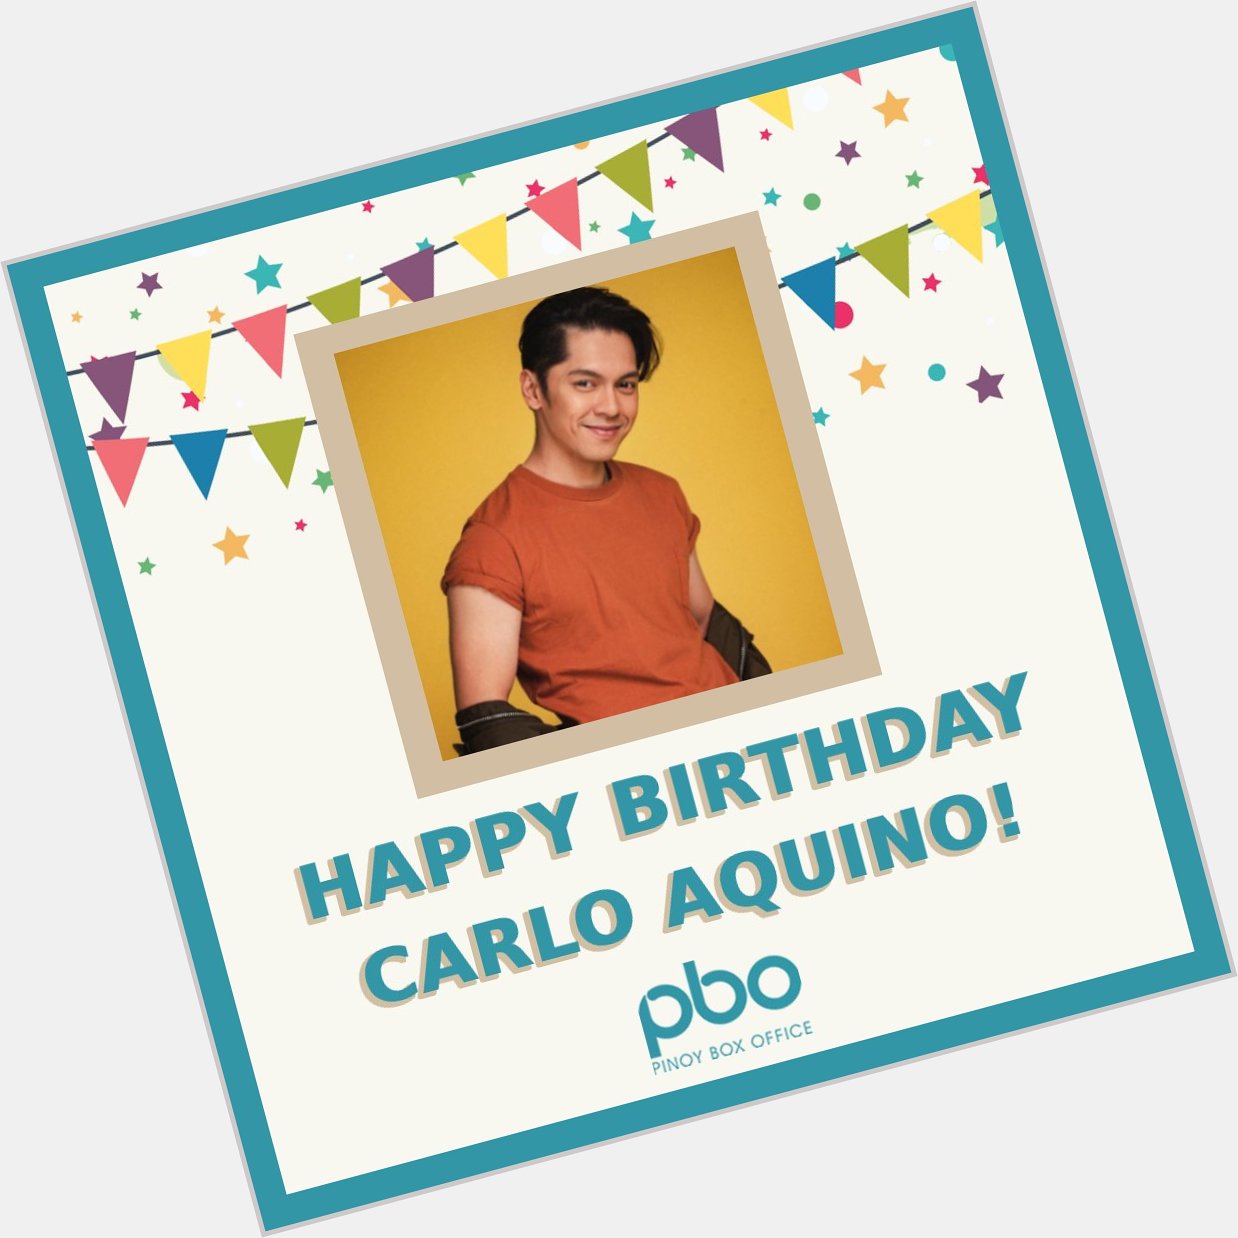 Happy Birthday Carlo Aquino! Wishing you an amazing birthday and a prosperous year ahead! 